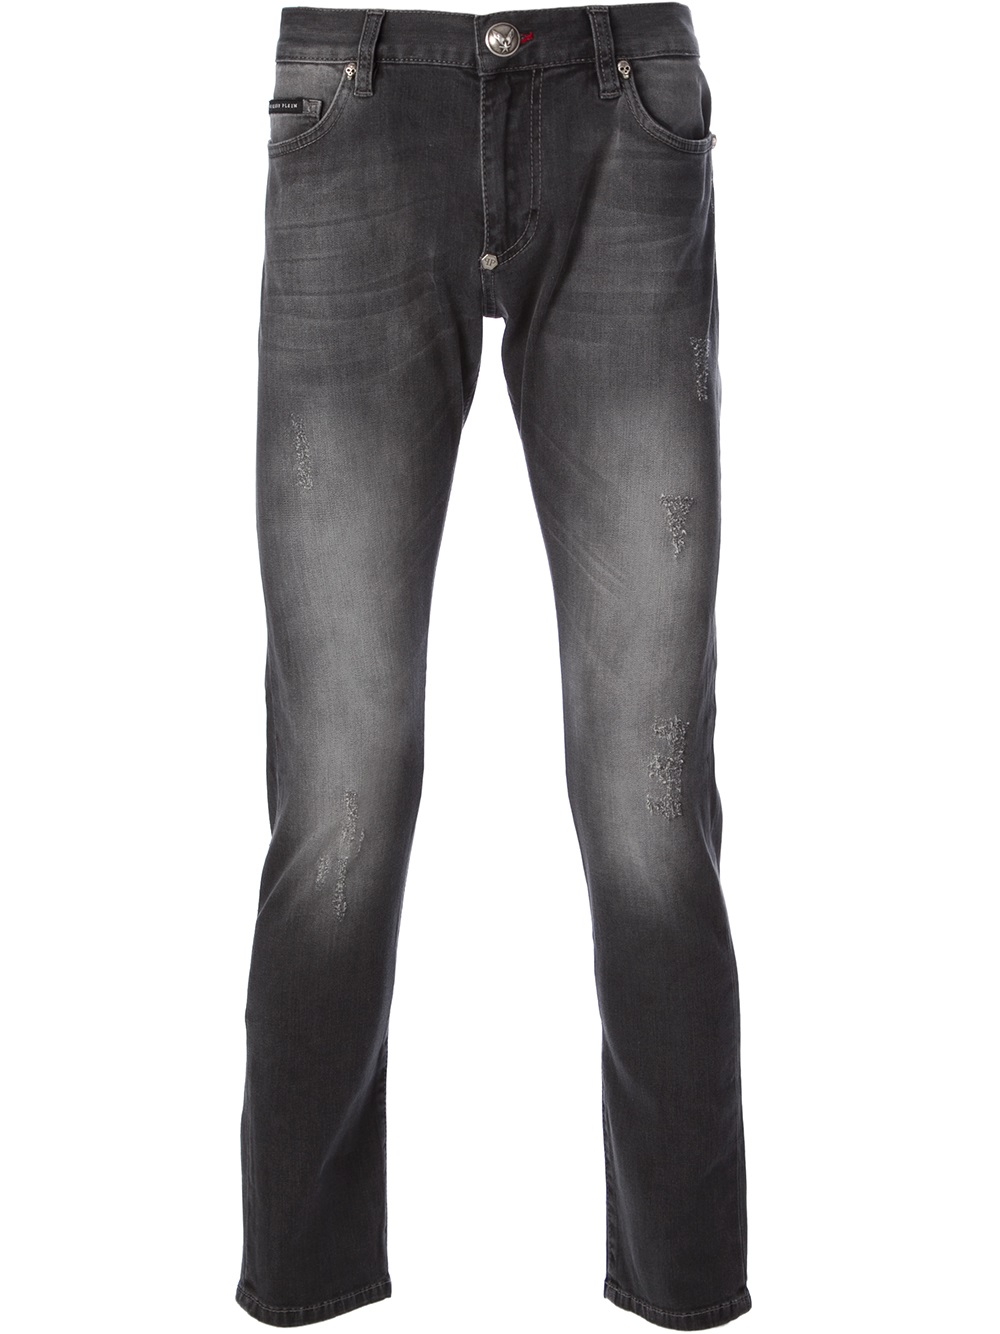 Lyst - Philipp Plein Denim Jeans in Gray for Men